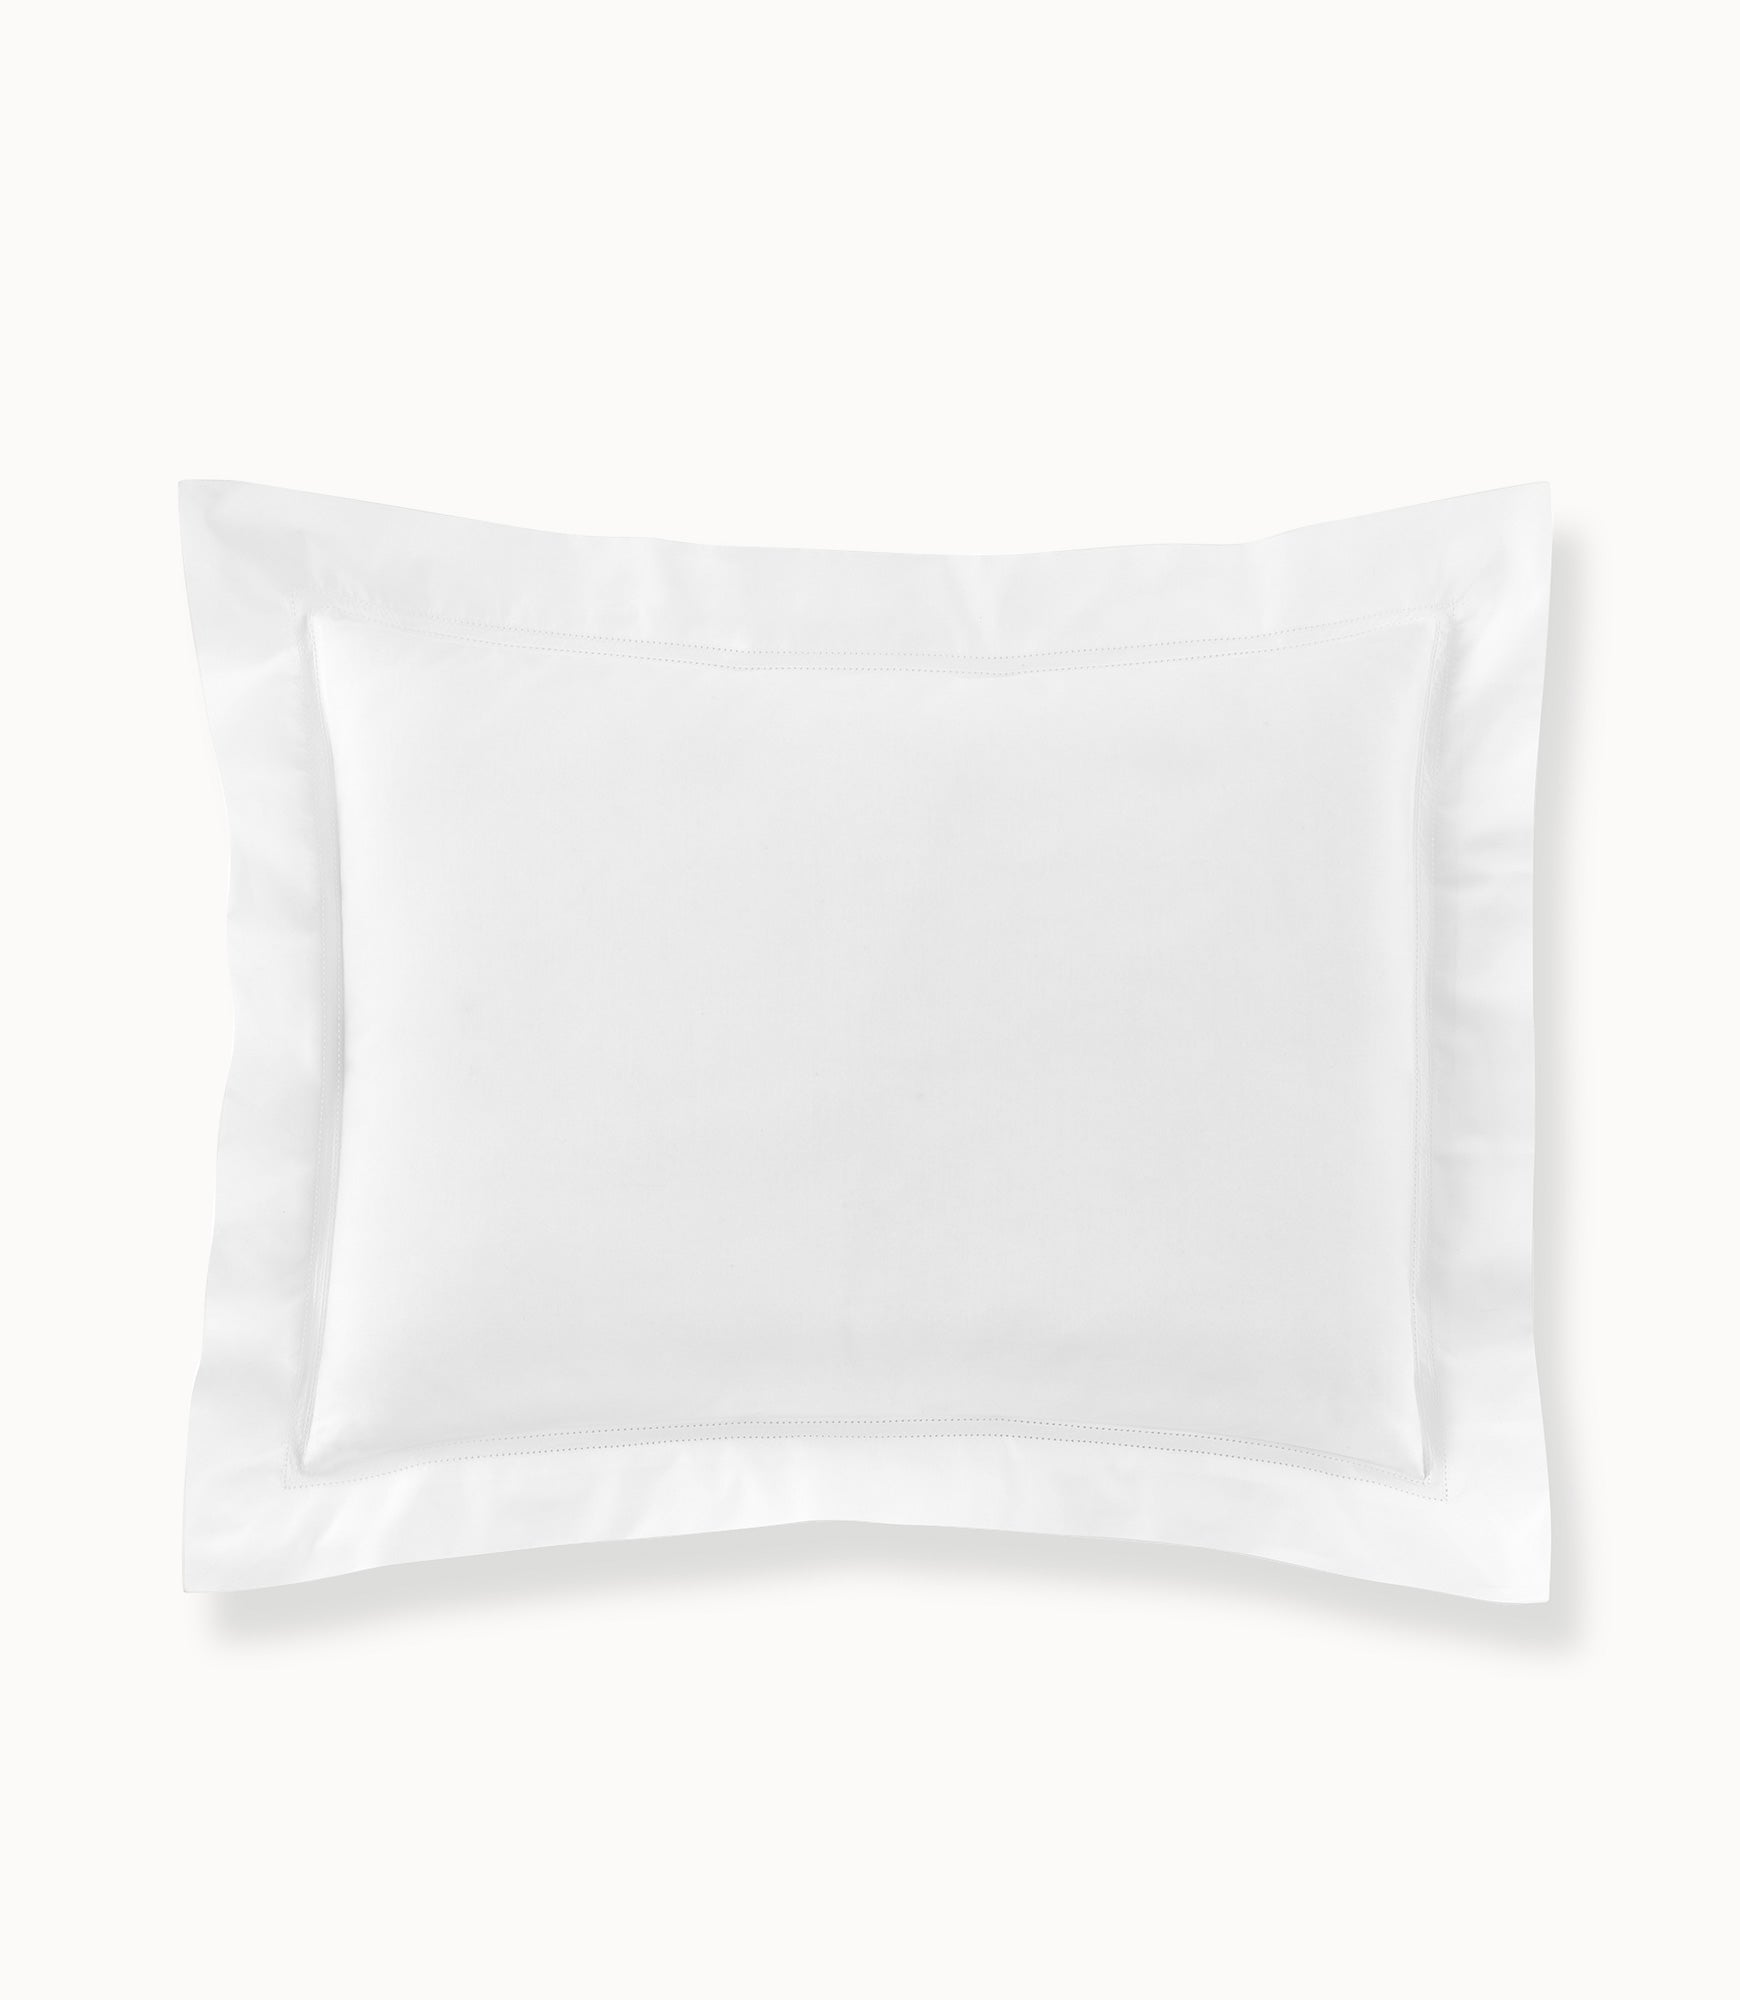 lyric percale pillow sham in White